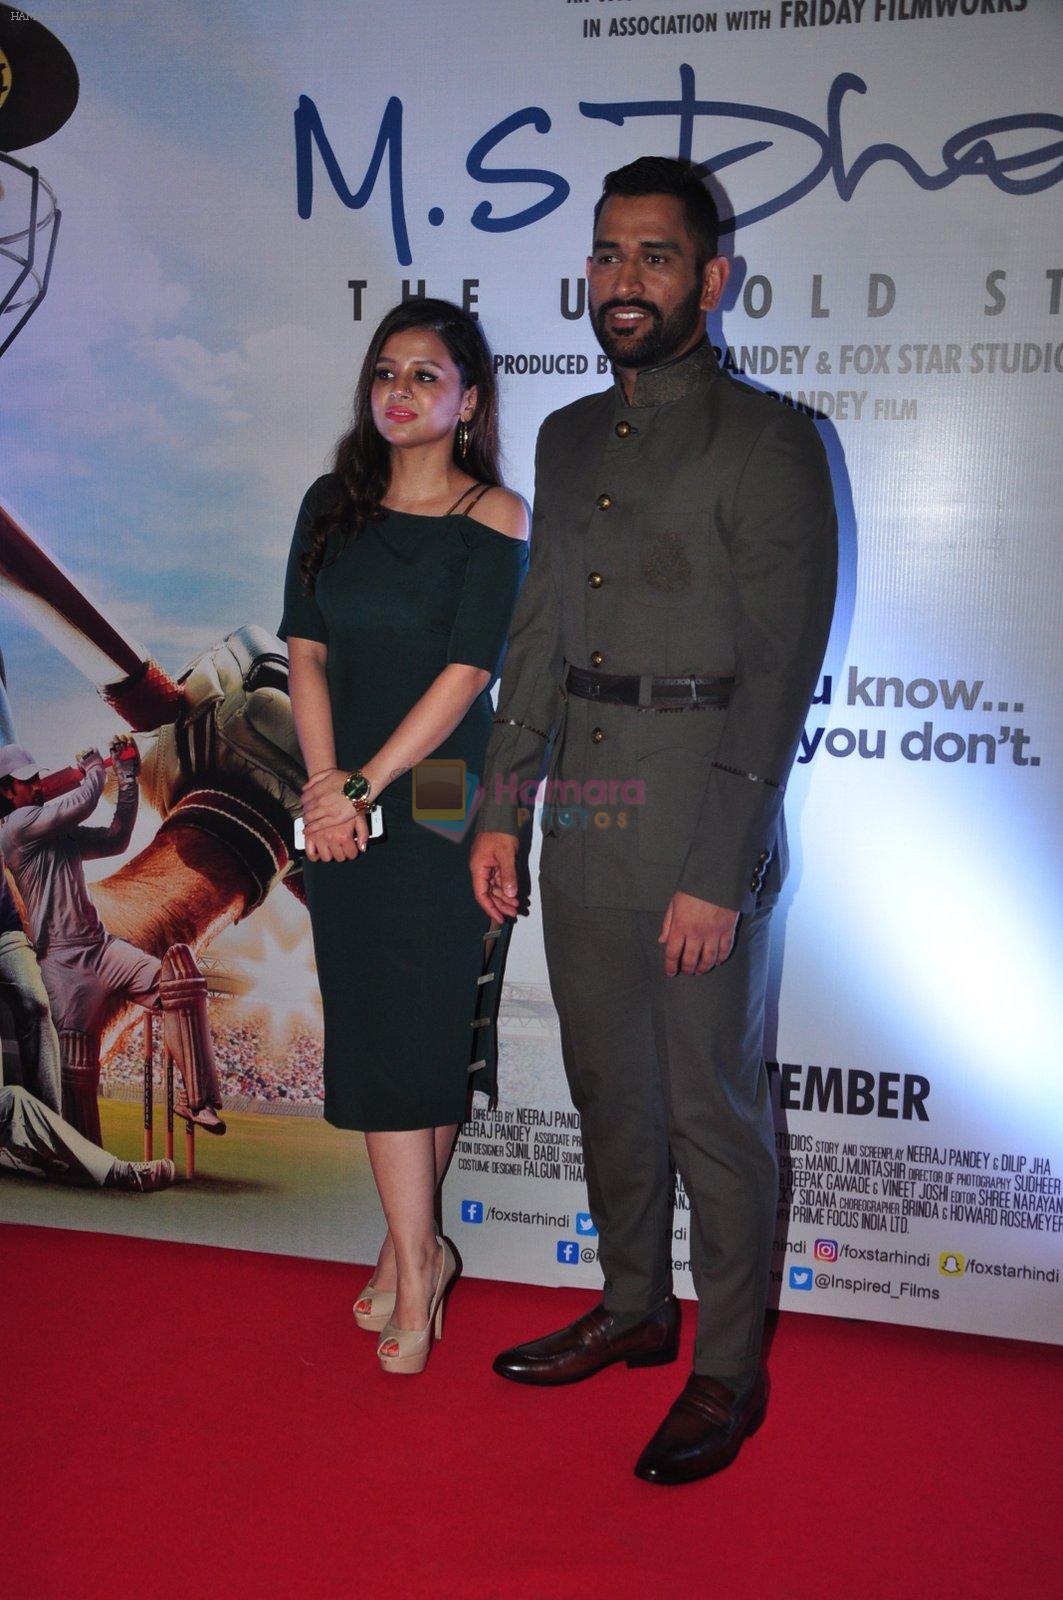 Mahendra Singh Dhoni at MS Dhoni premiere in Mumbai on 29th Sept 2016